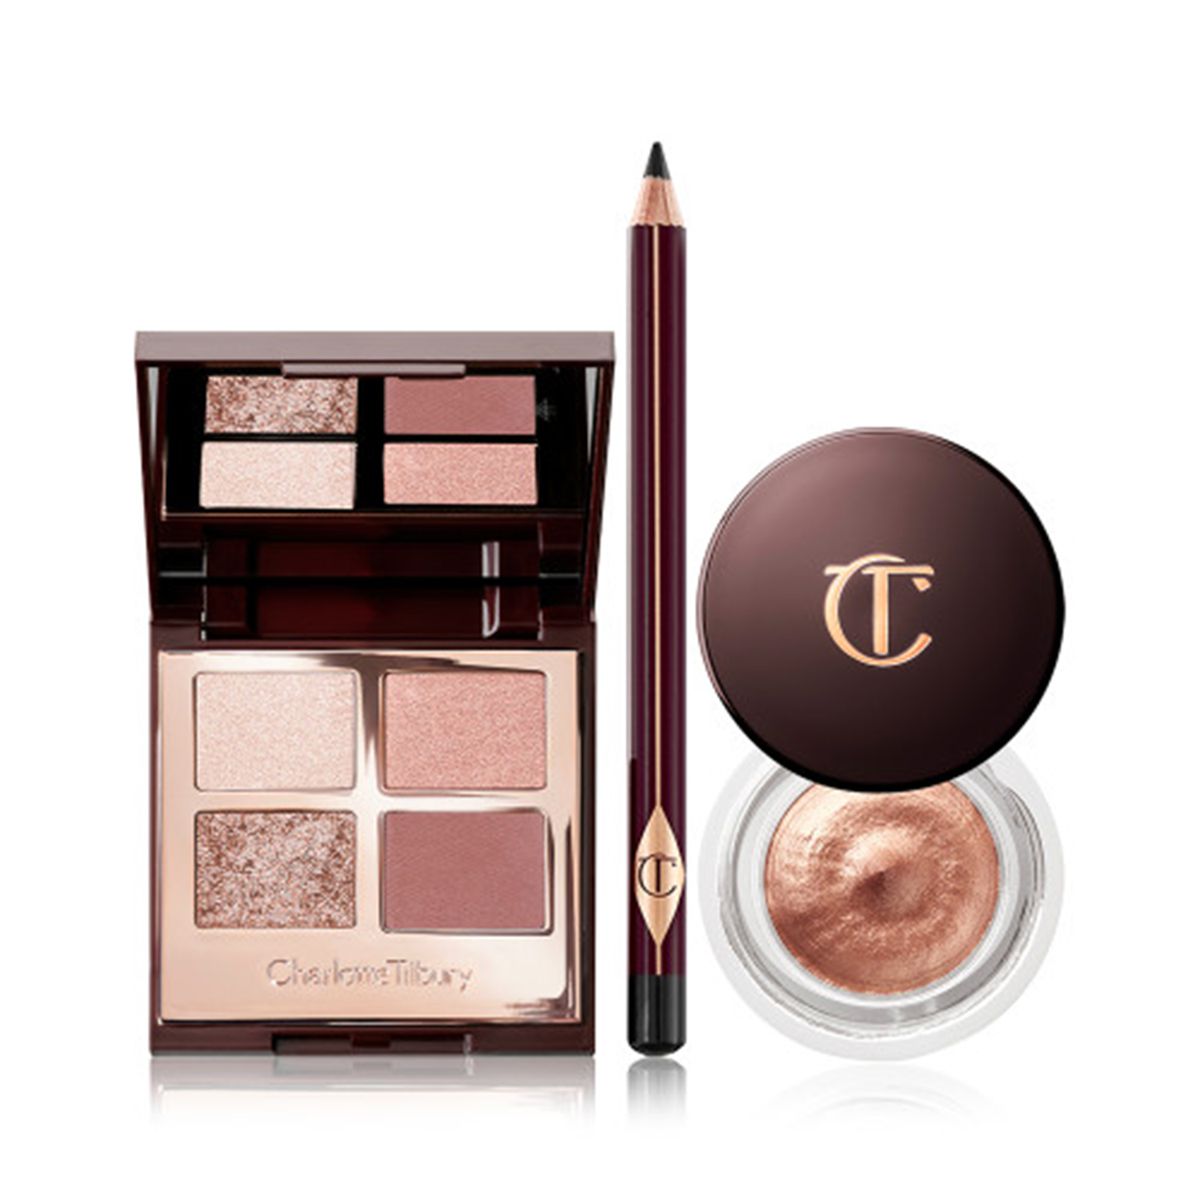 Charlotte Tilbury Makeup Kit Sets